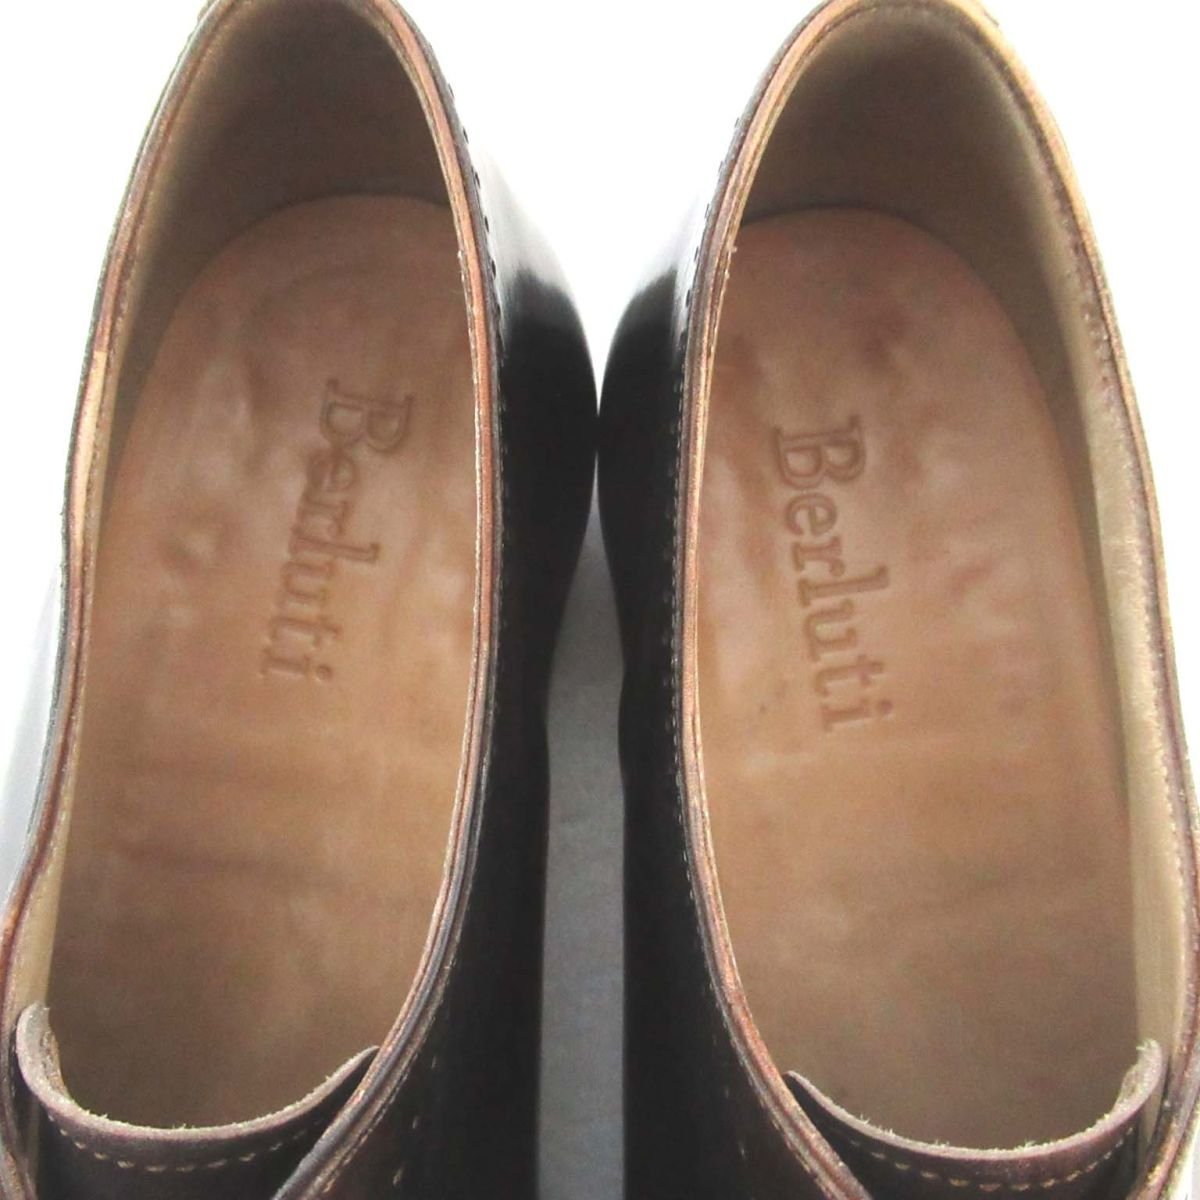  beautiful goods Berluti Berluti strut chip medali on leather Loafer business shoes 1456 5 size 25.5cm corresponding tea core black 